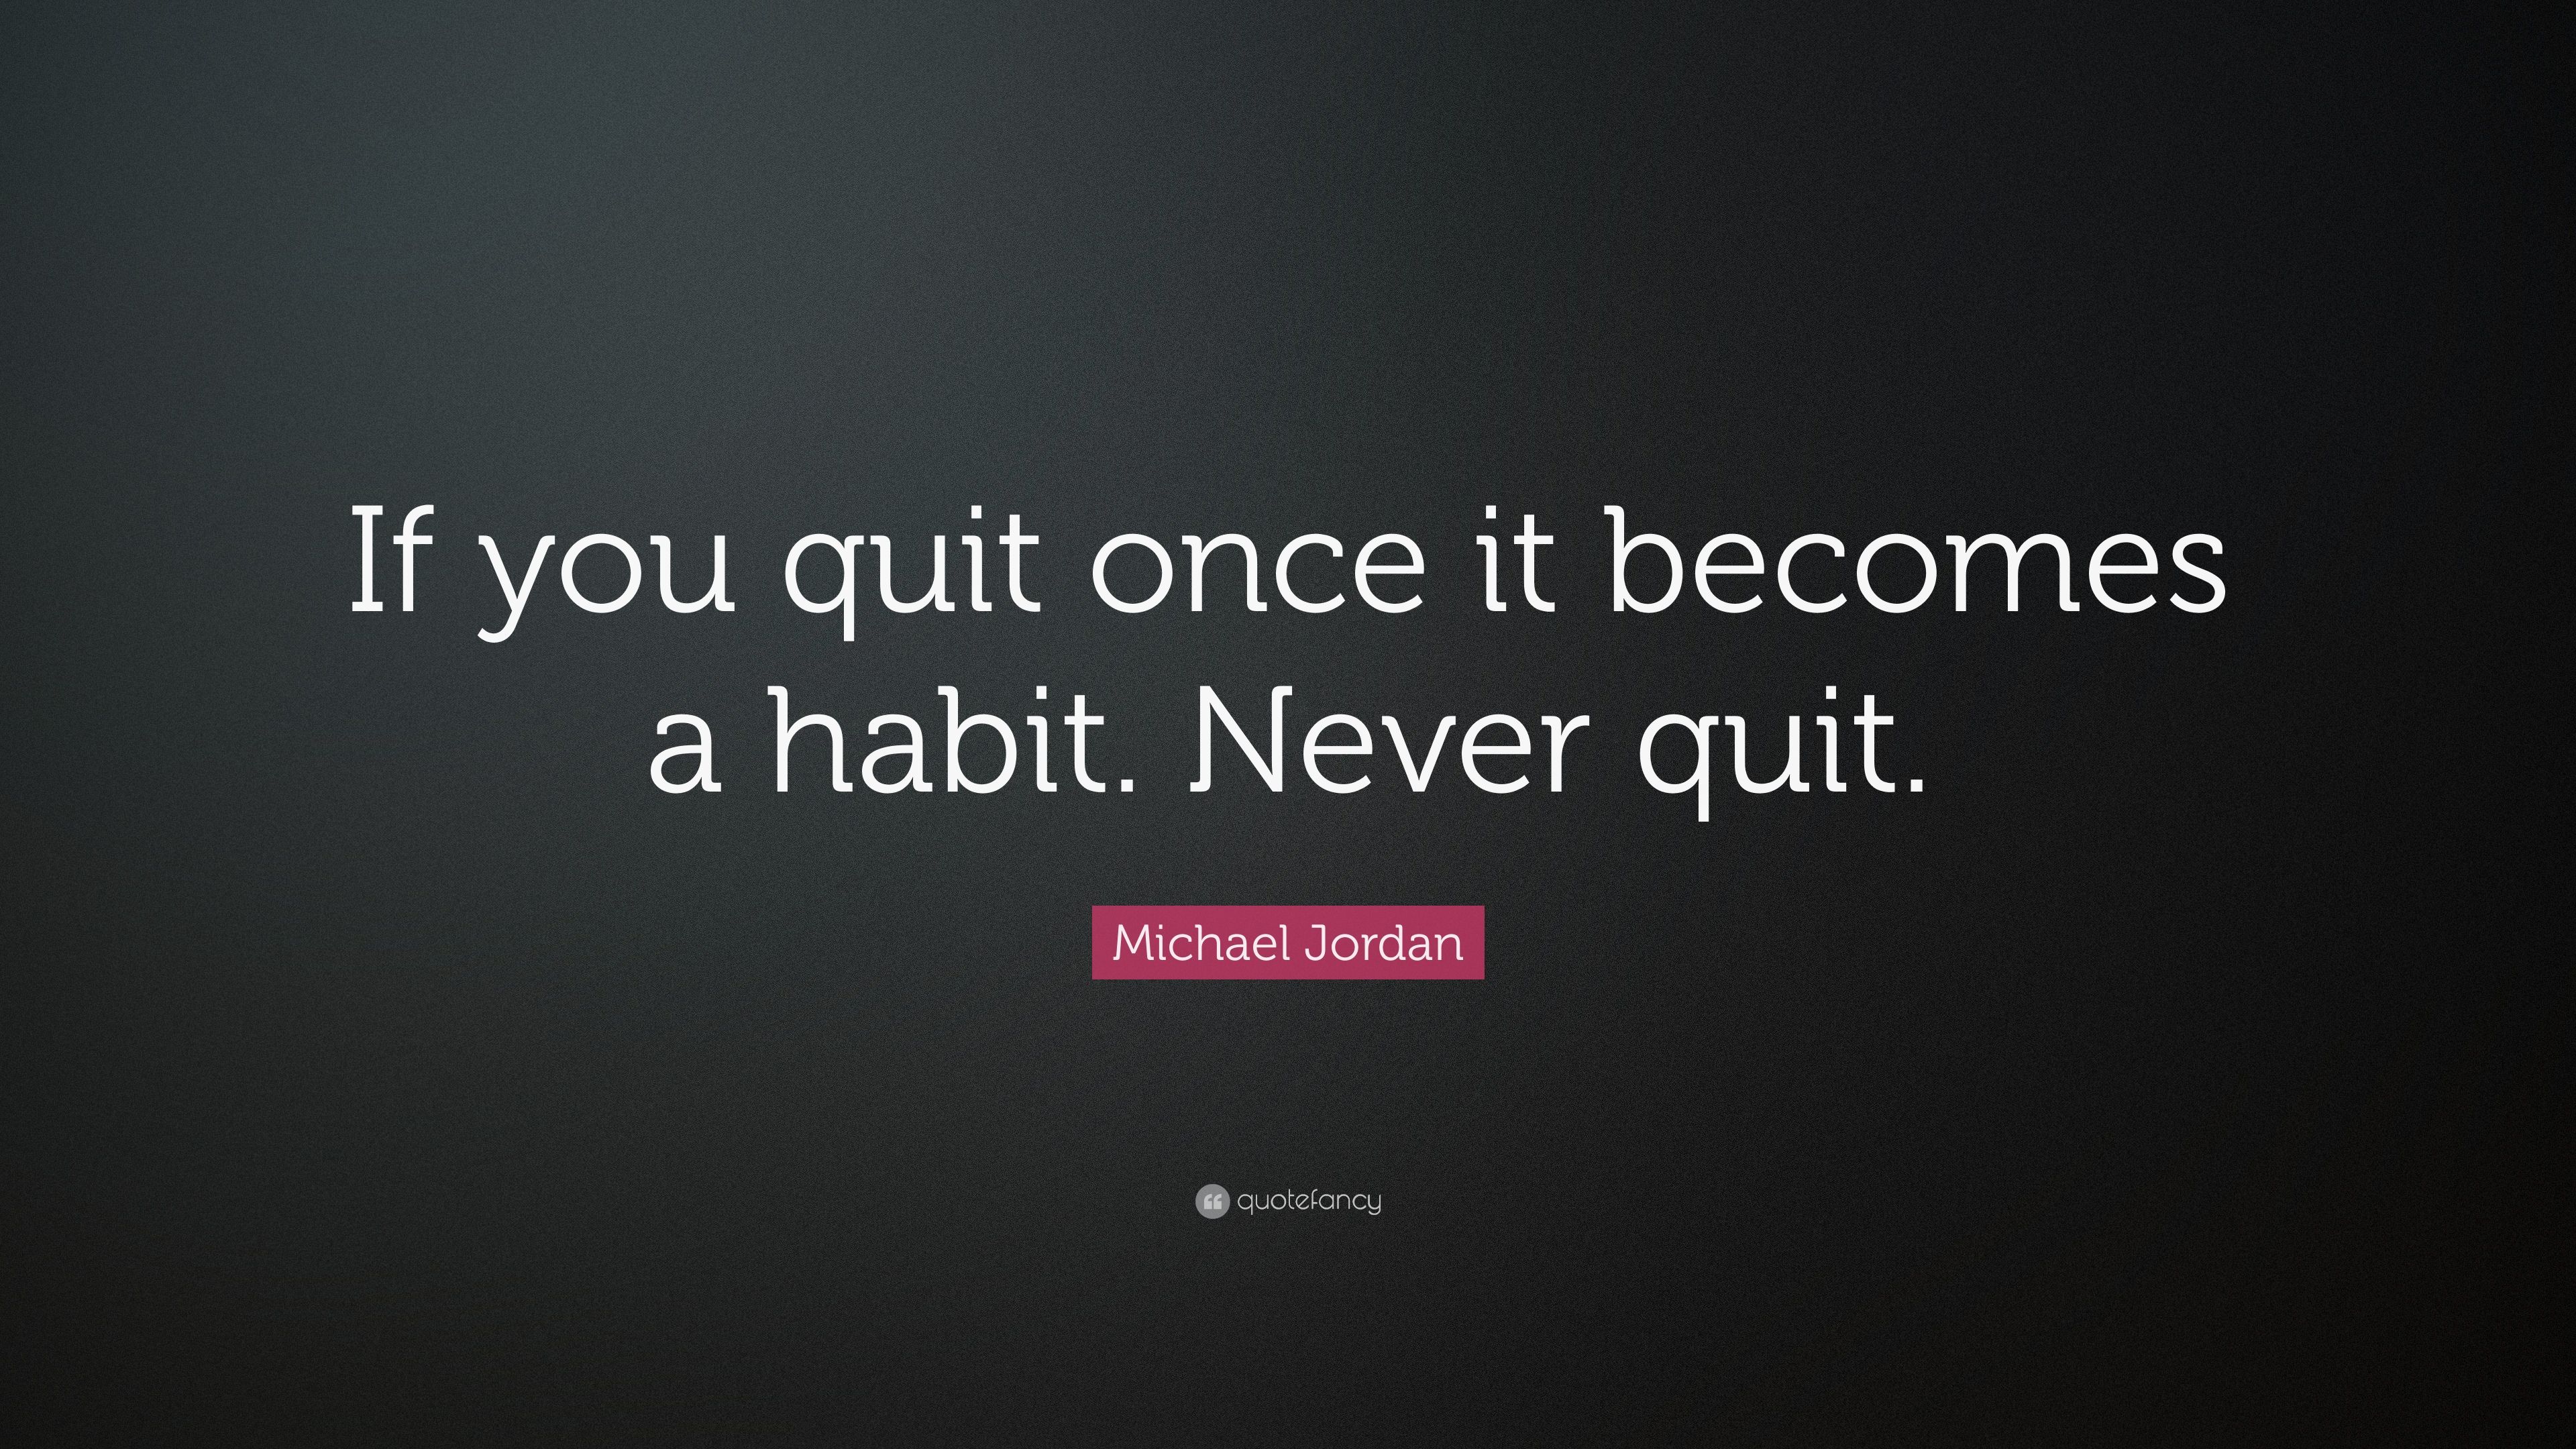 Michael Jordan Quote: “If you quit once it becomes a habit. Never quit.” (25 wallpaper)